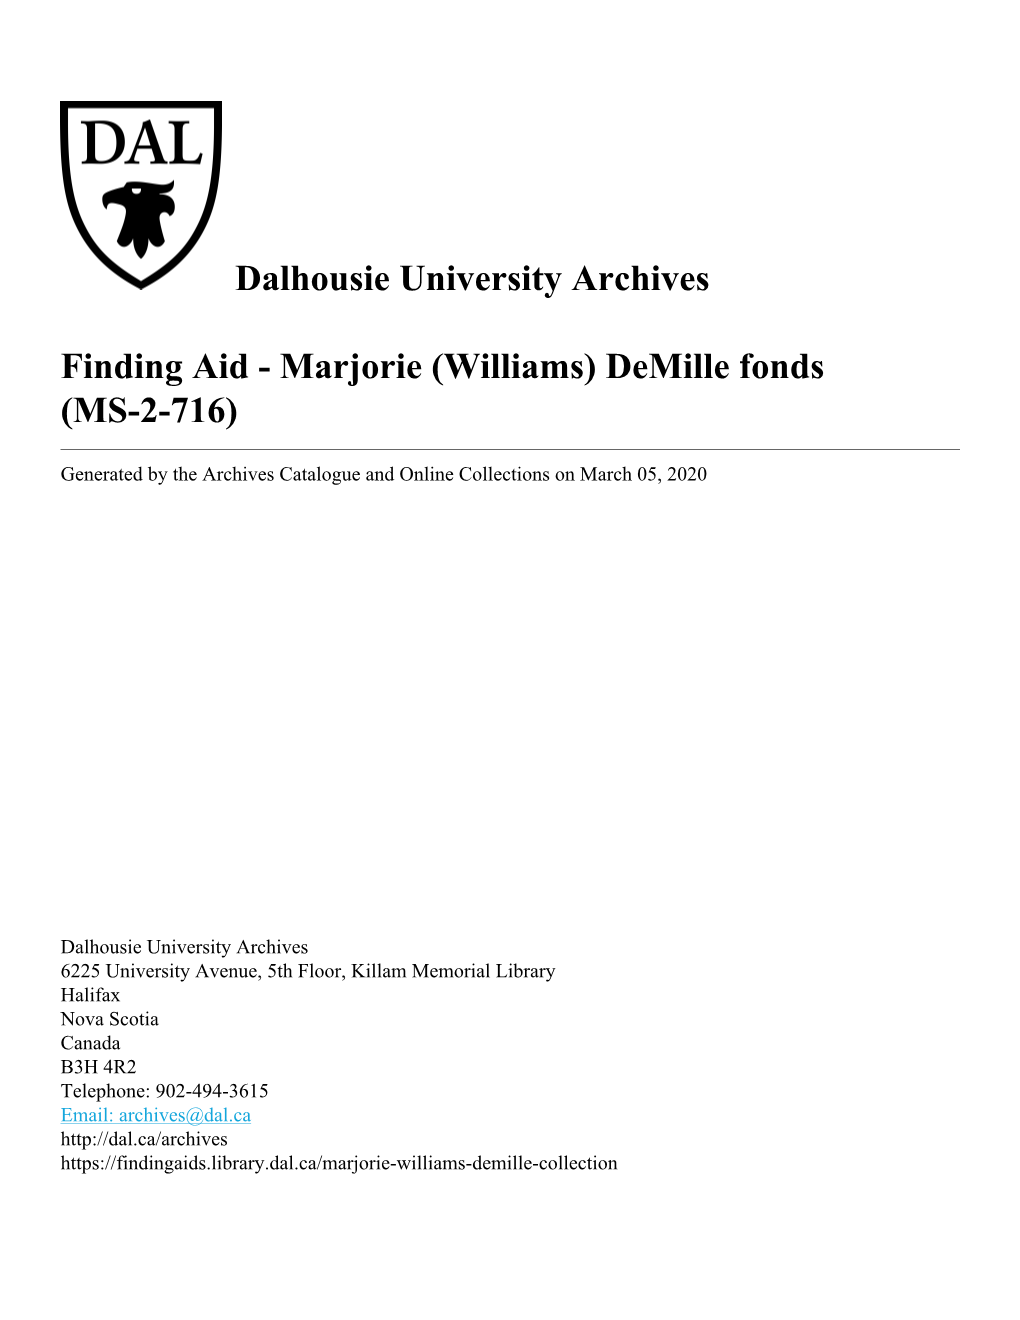 Marjorie (Williams) Demille Fonds (MS-2-716)